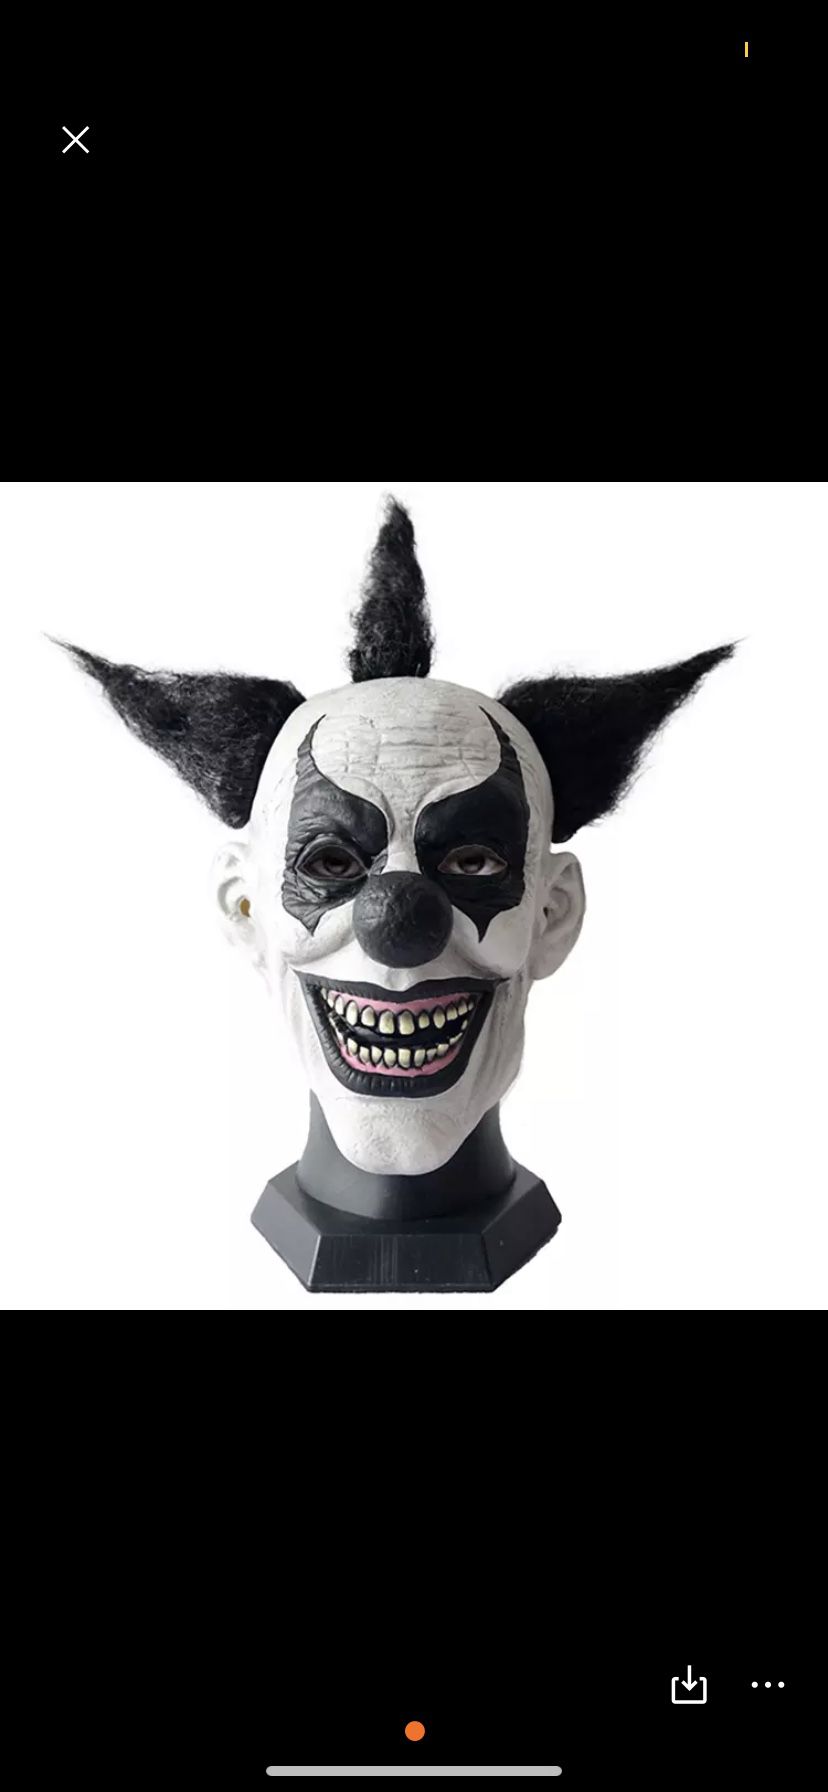 Scary Clown Halloween Mask 